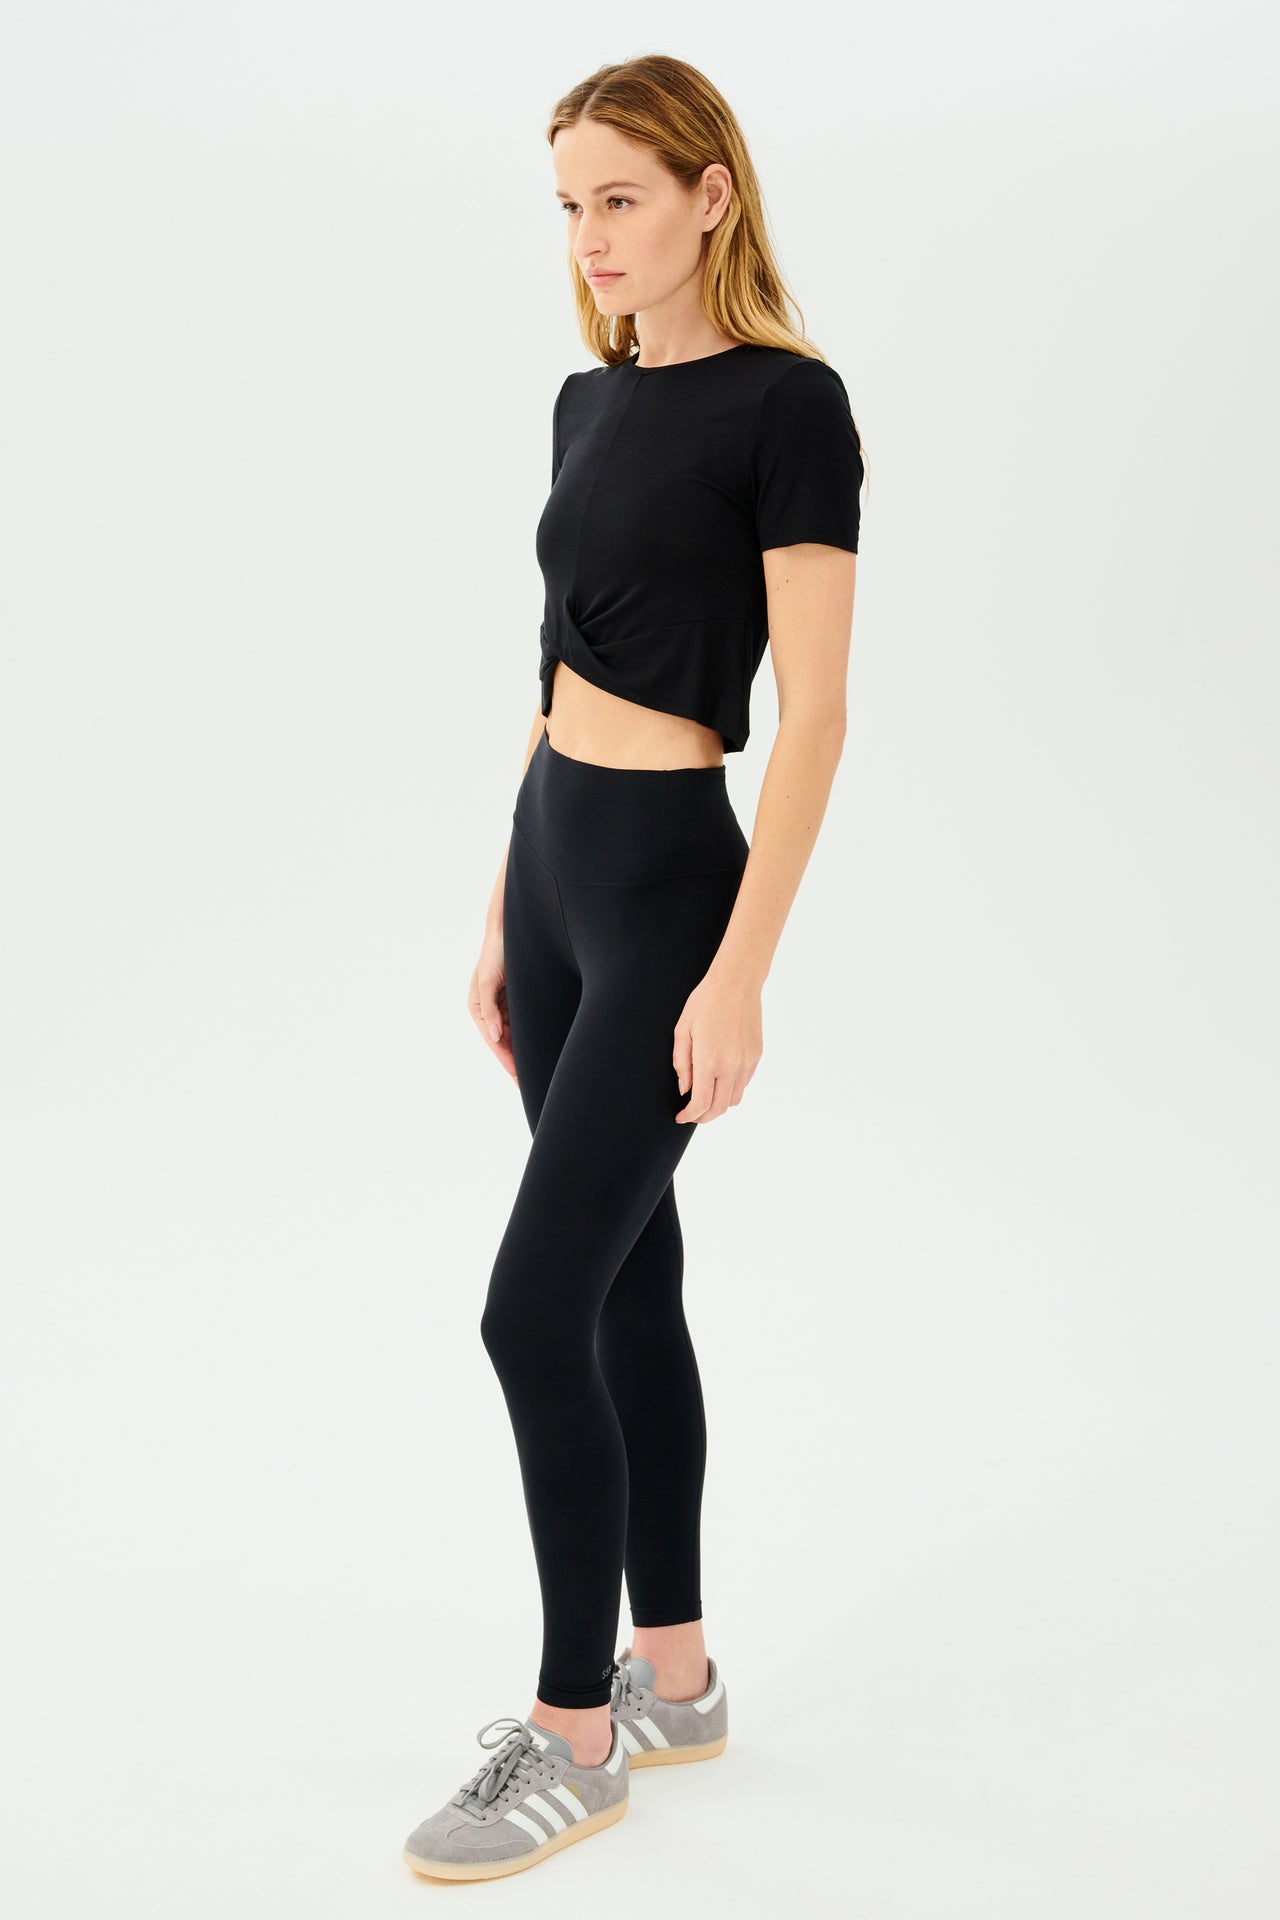 A woman wearing high waist leggings and a SPLITS59 Daisy Jersey Tee - Black.